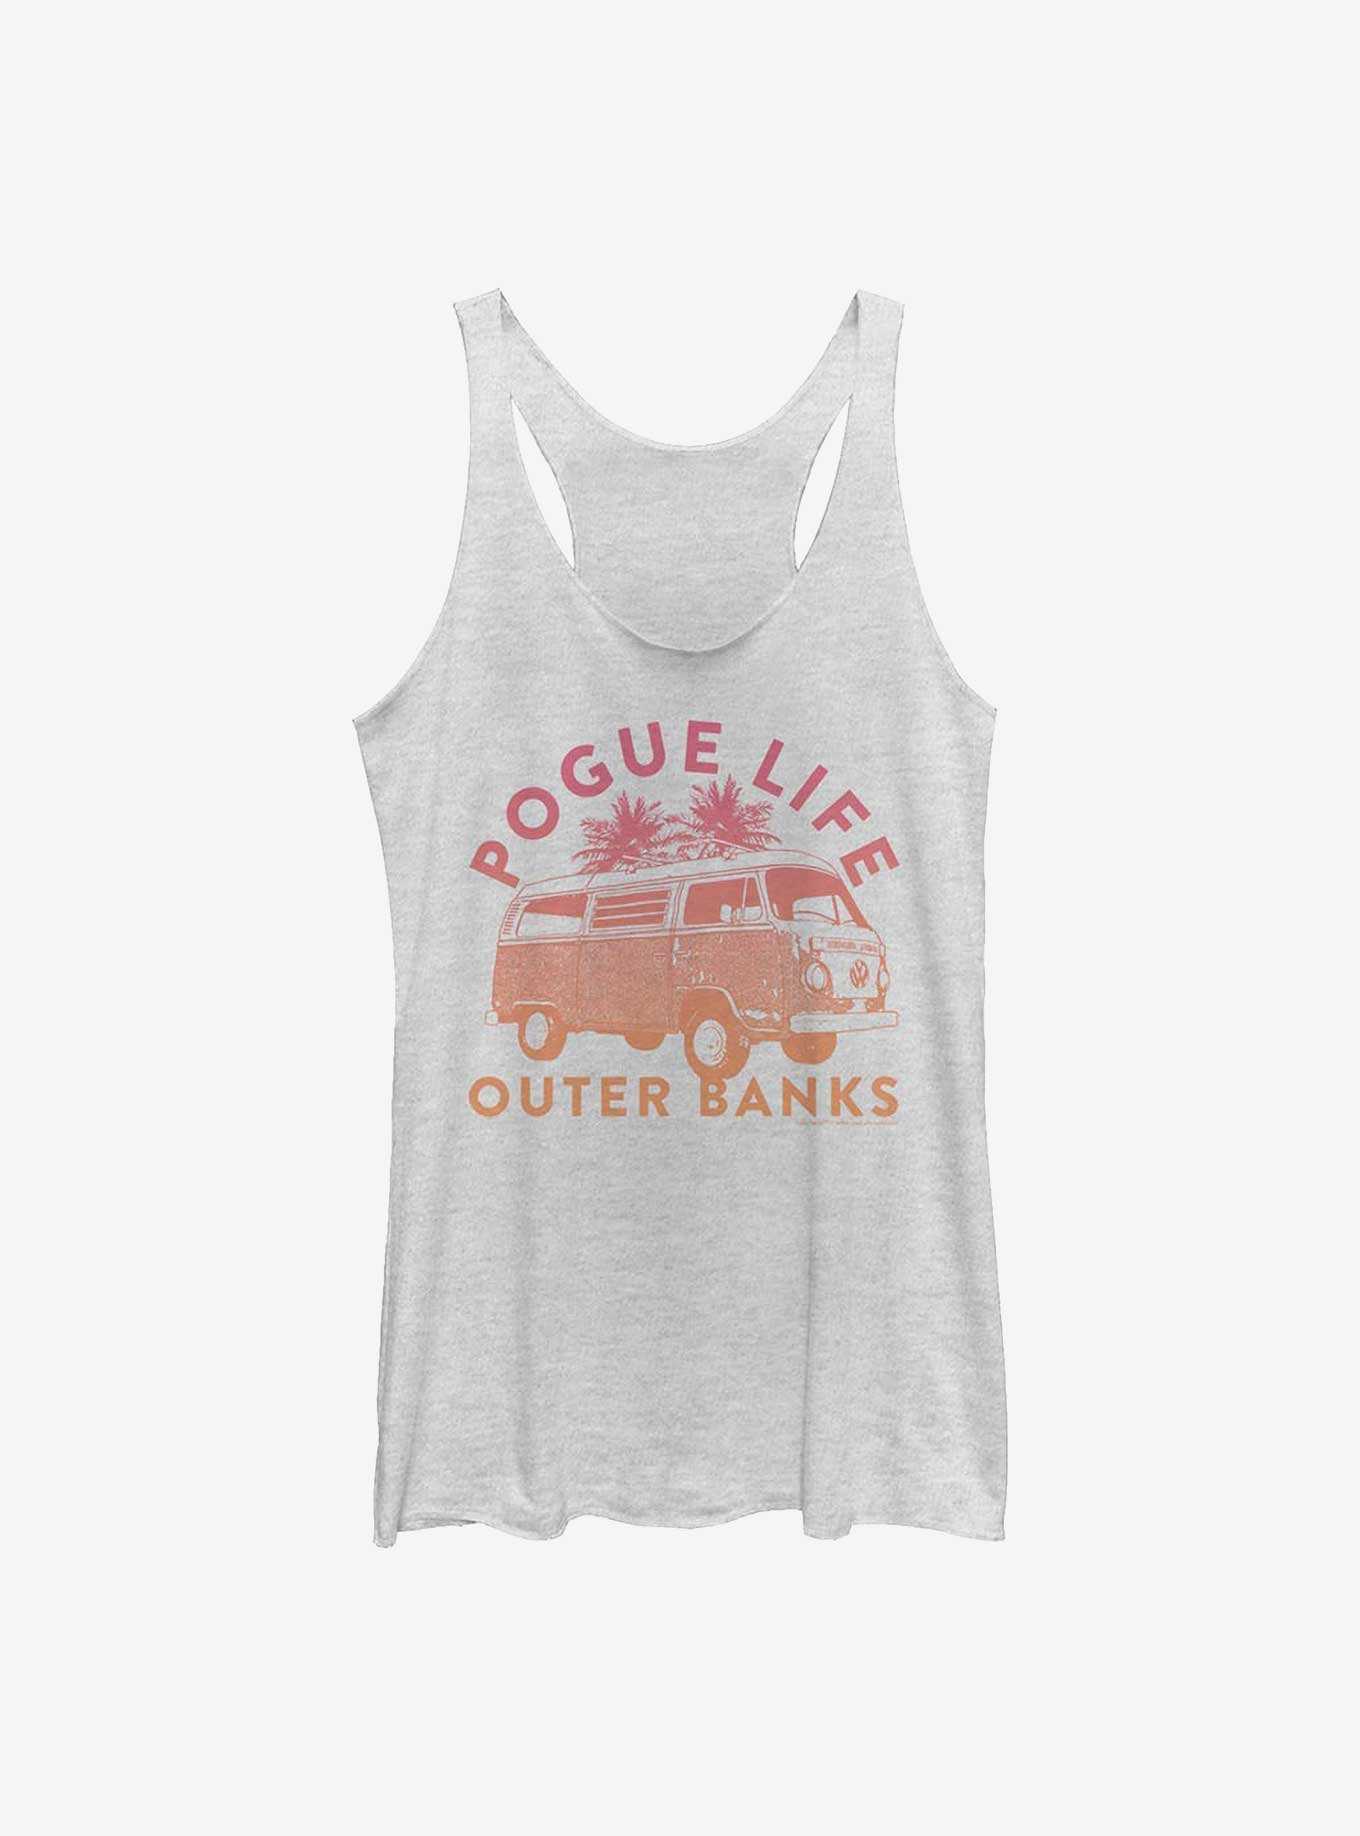 Outer Banks Pogue Life Girls Tank, , hi-res